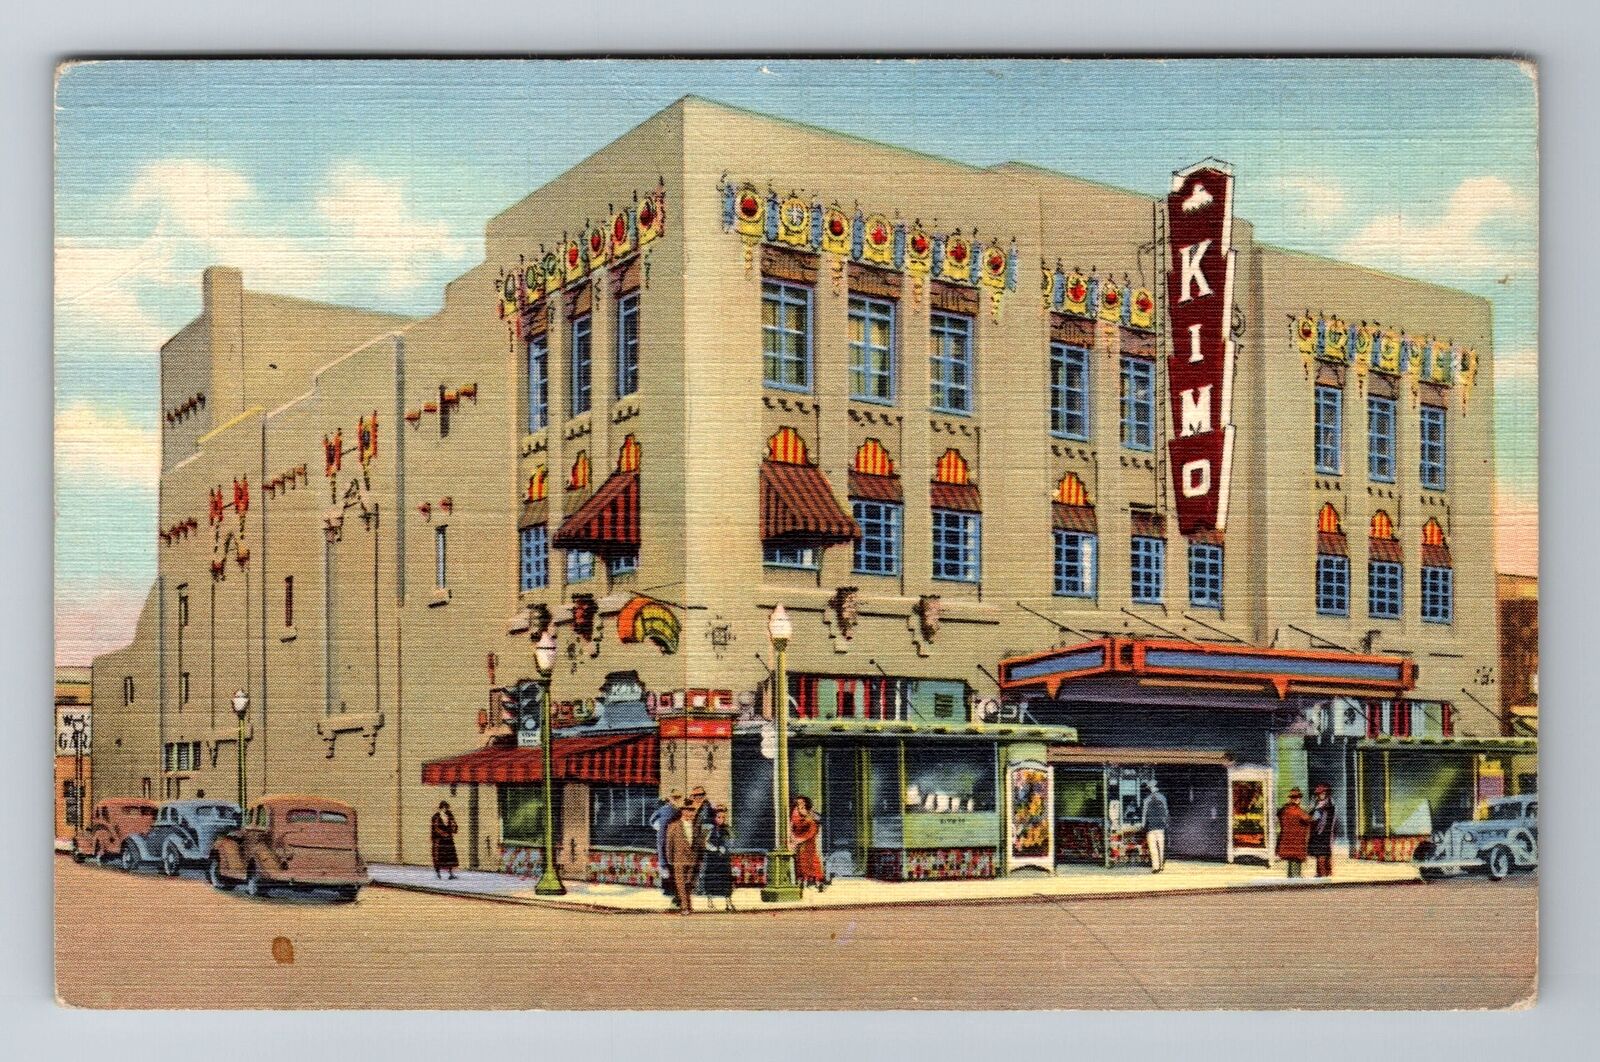 Albuquerque NM-New Mexico, Kimo Indian Theatre, Antique, Vintage Postcard